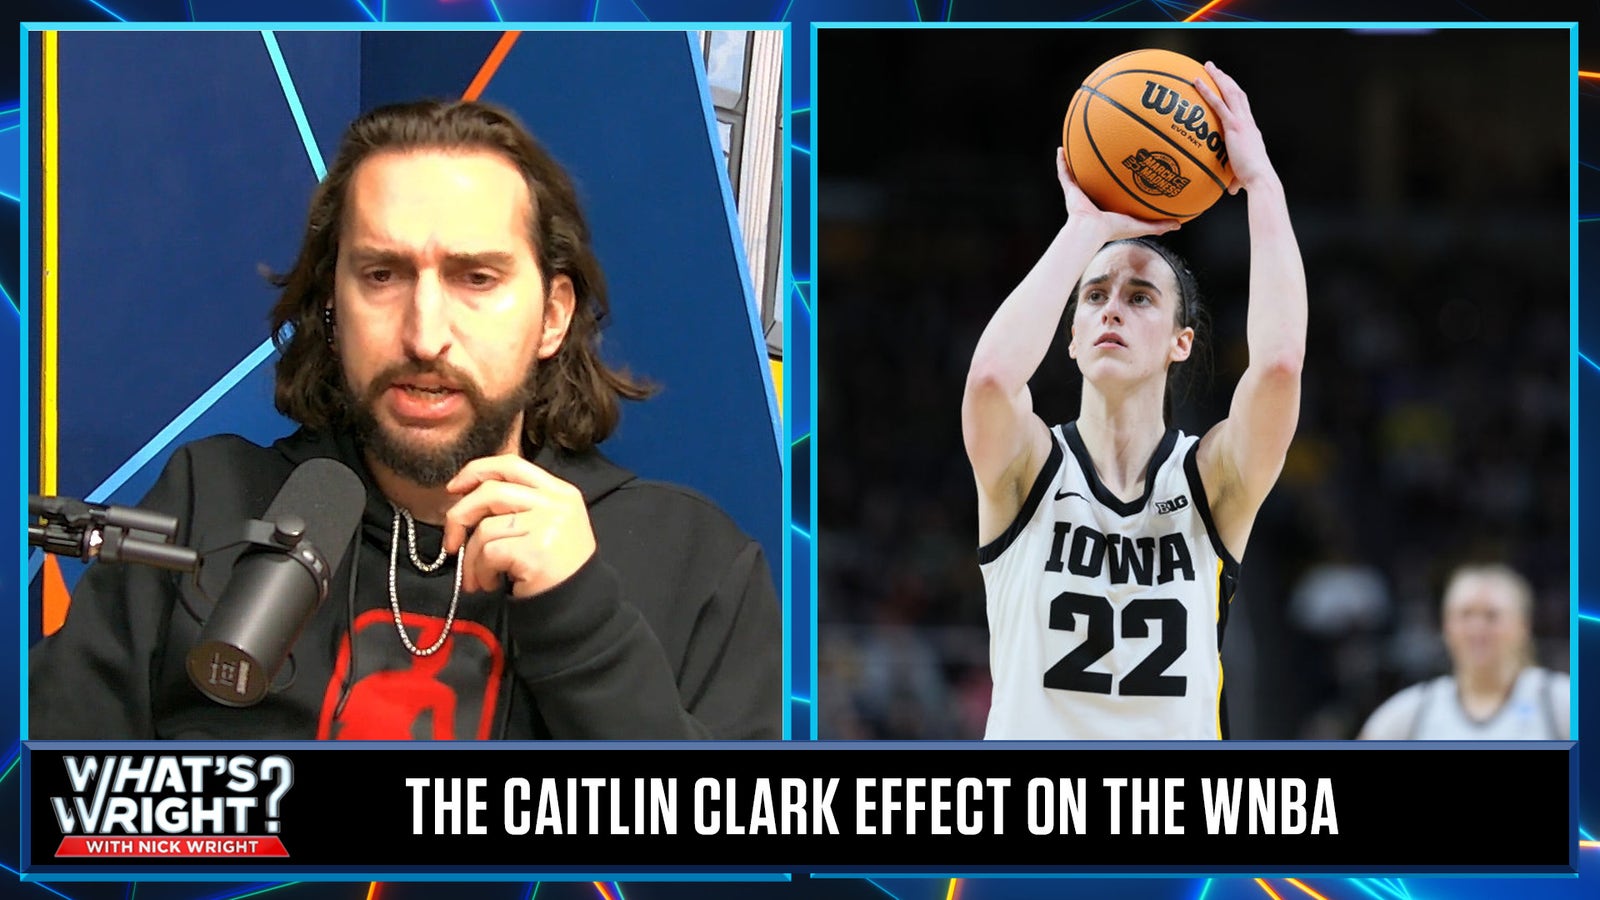 How the Caitlin Clark effect raises economic pressure on WNBA for future stars